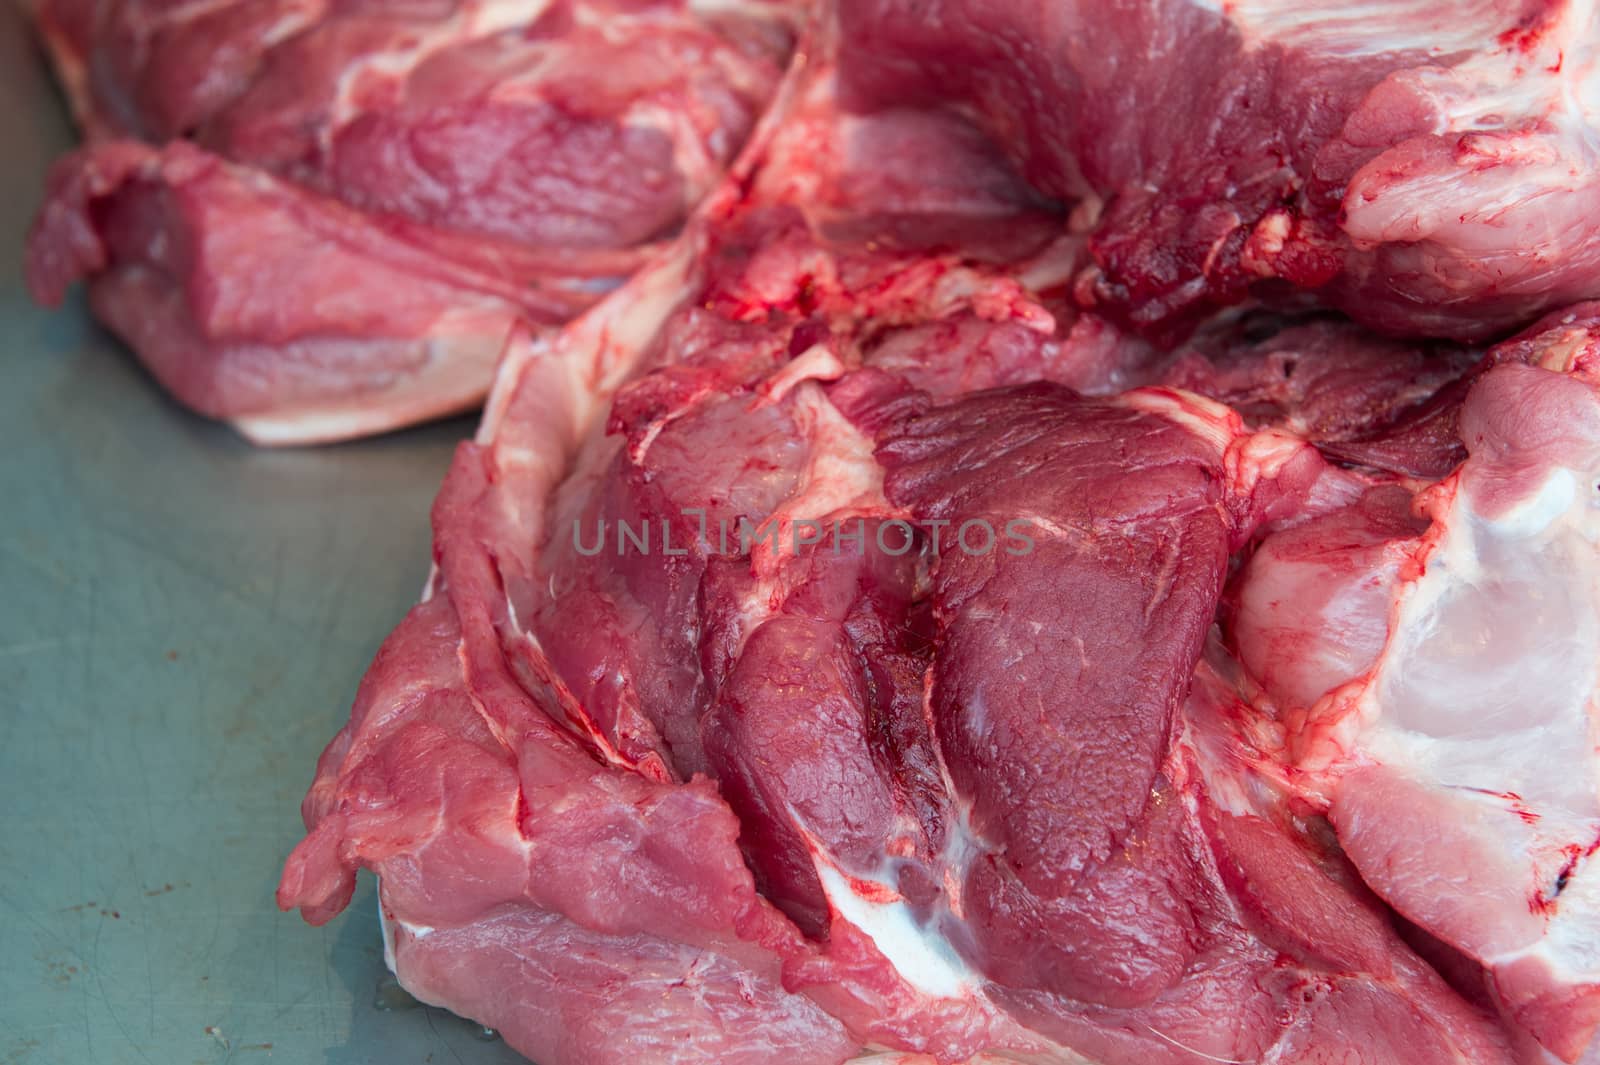 Closeup of pork in market